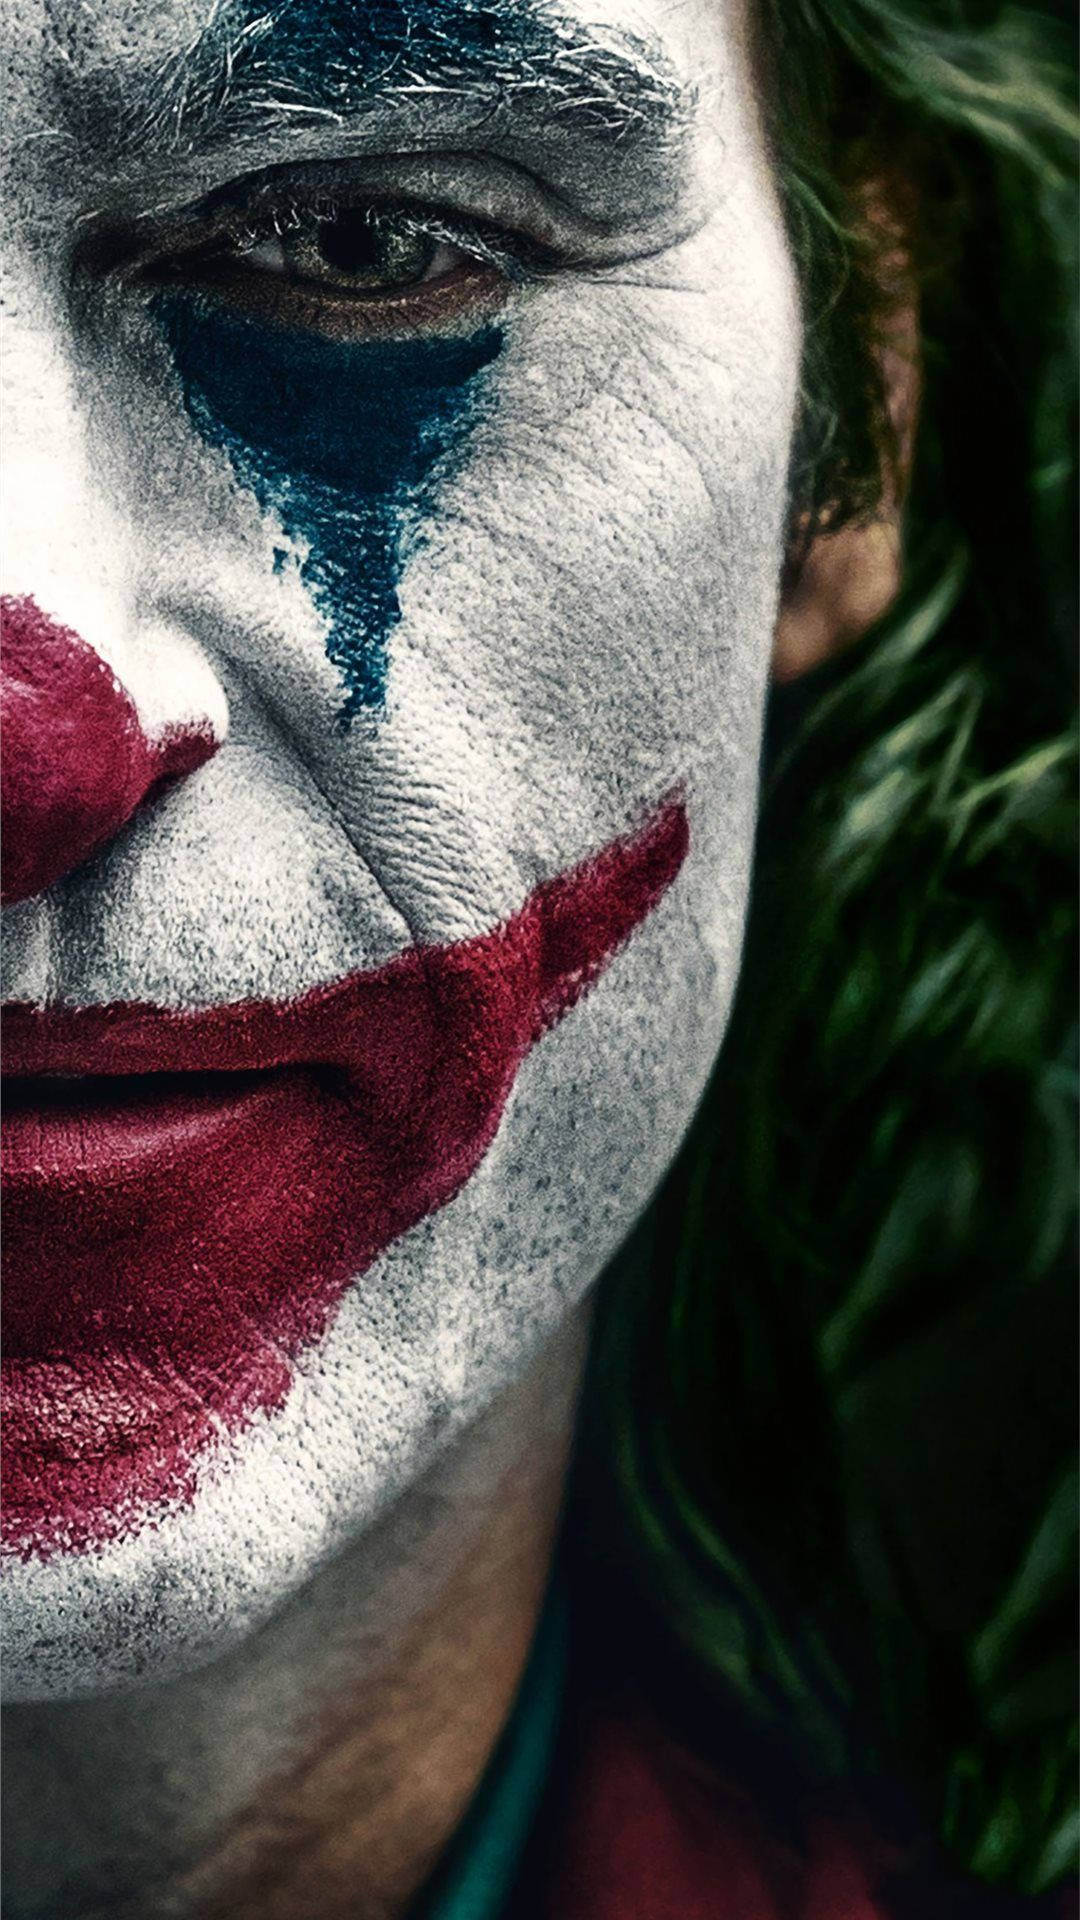 Half-face Portrait Joker 2019